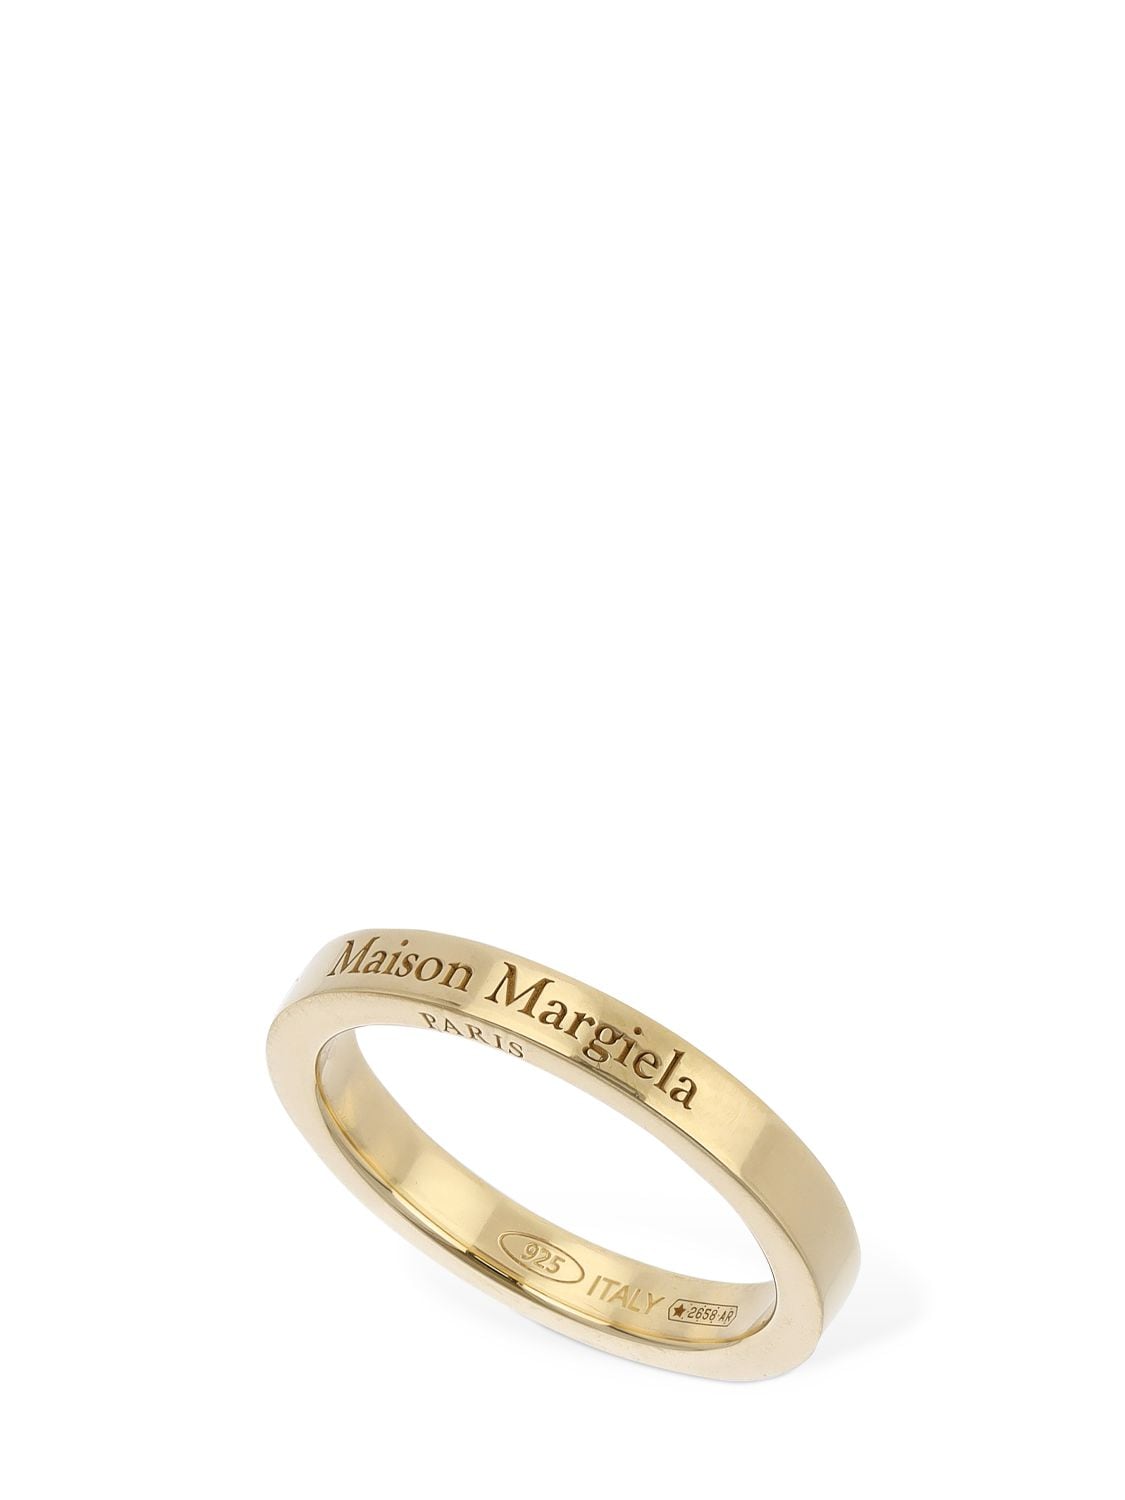 Maison Margiela Thin Ring In Gold